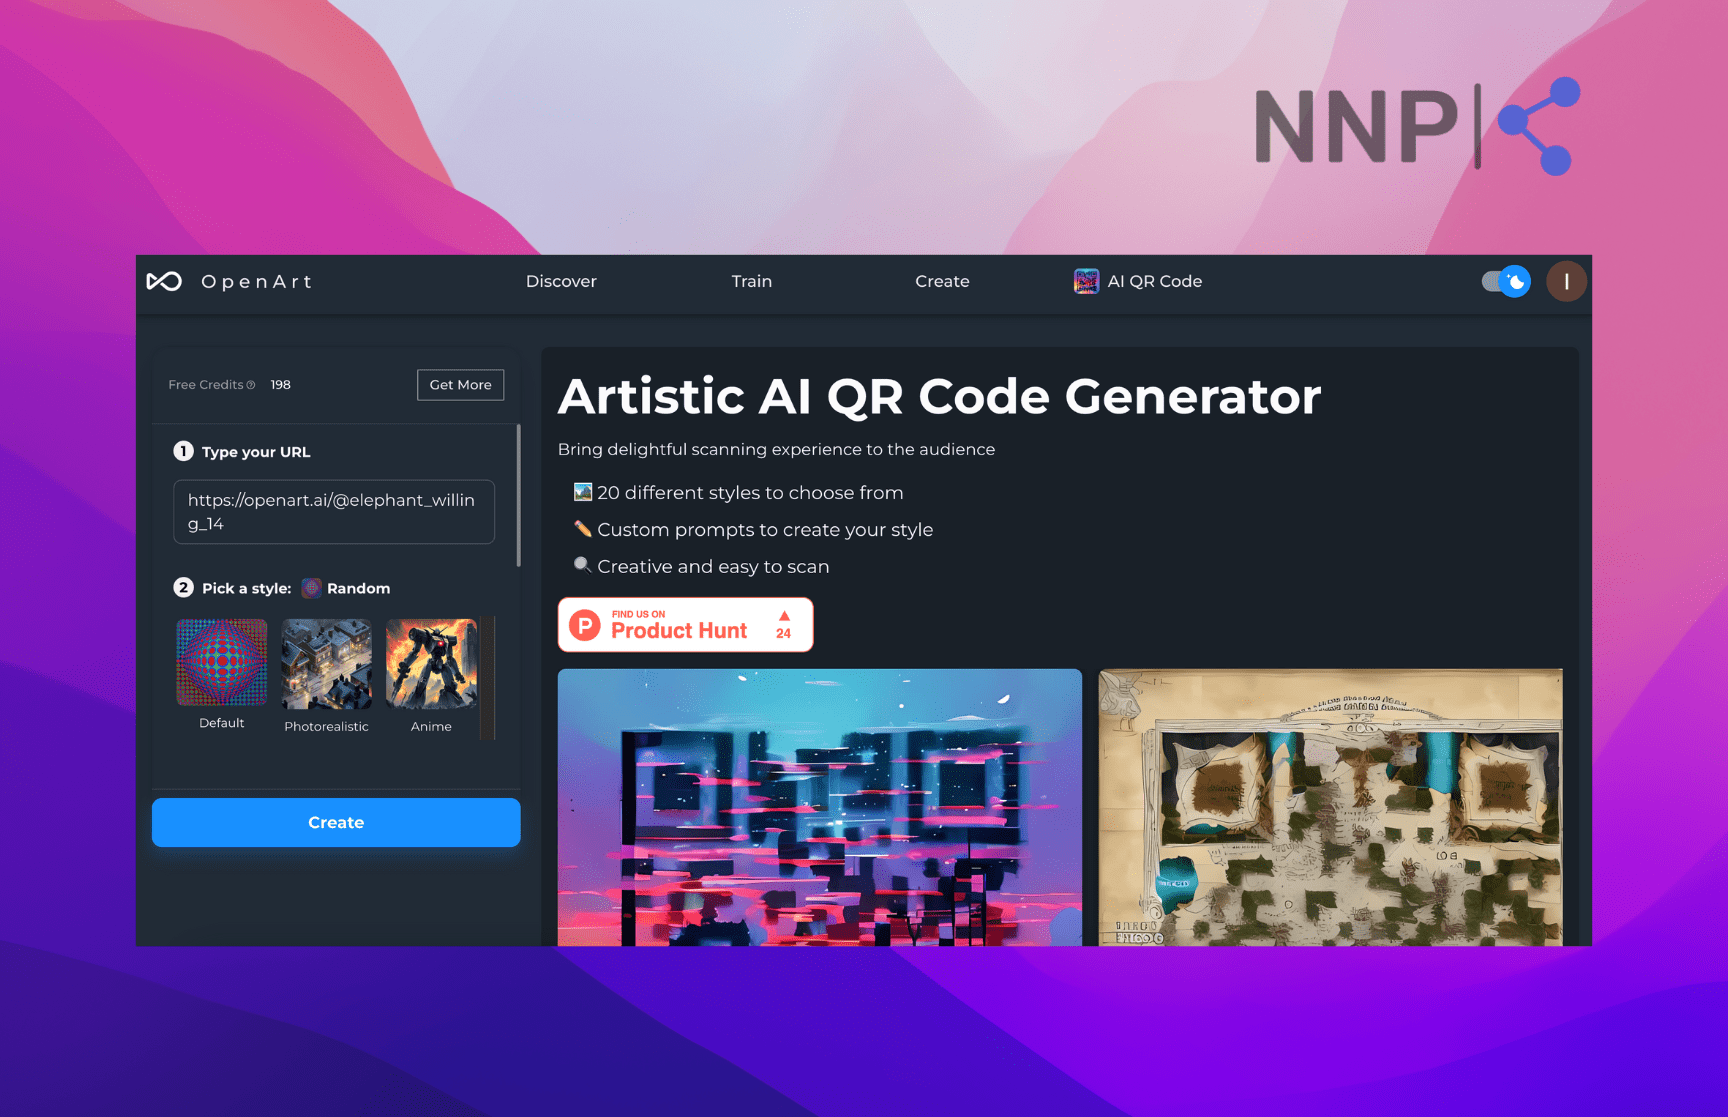 OpenArt’s Artistic AI QR Code Generator